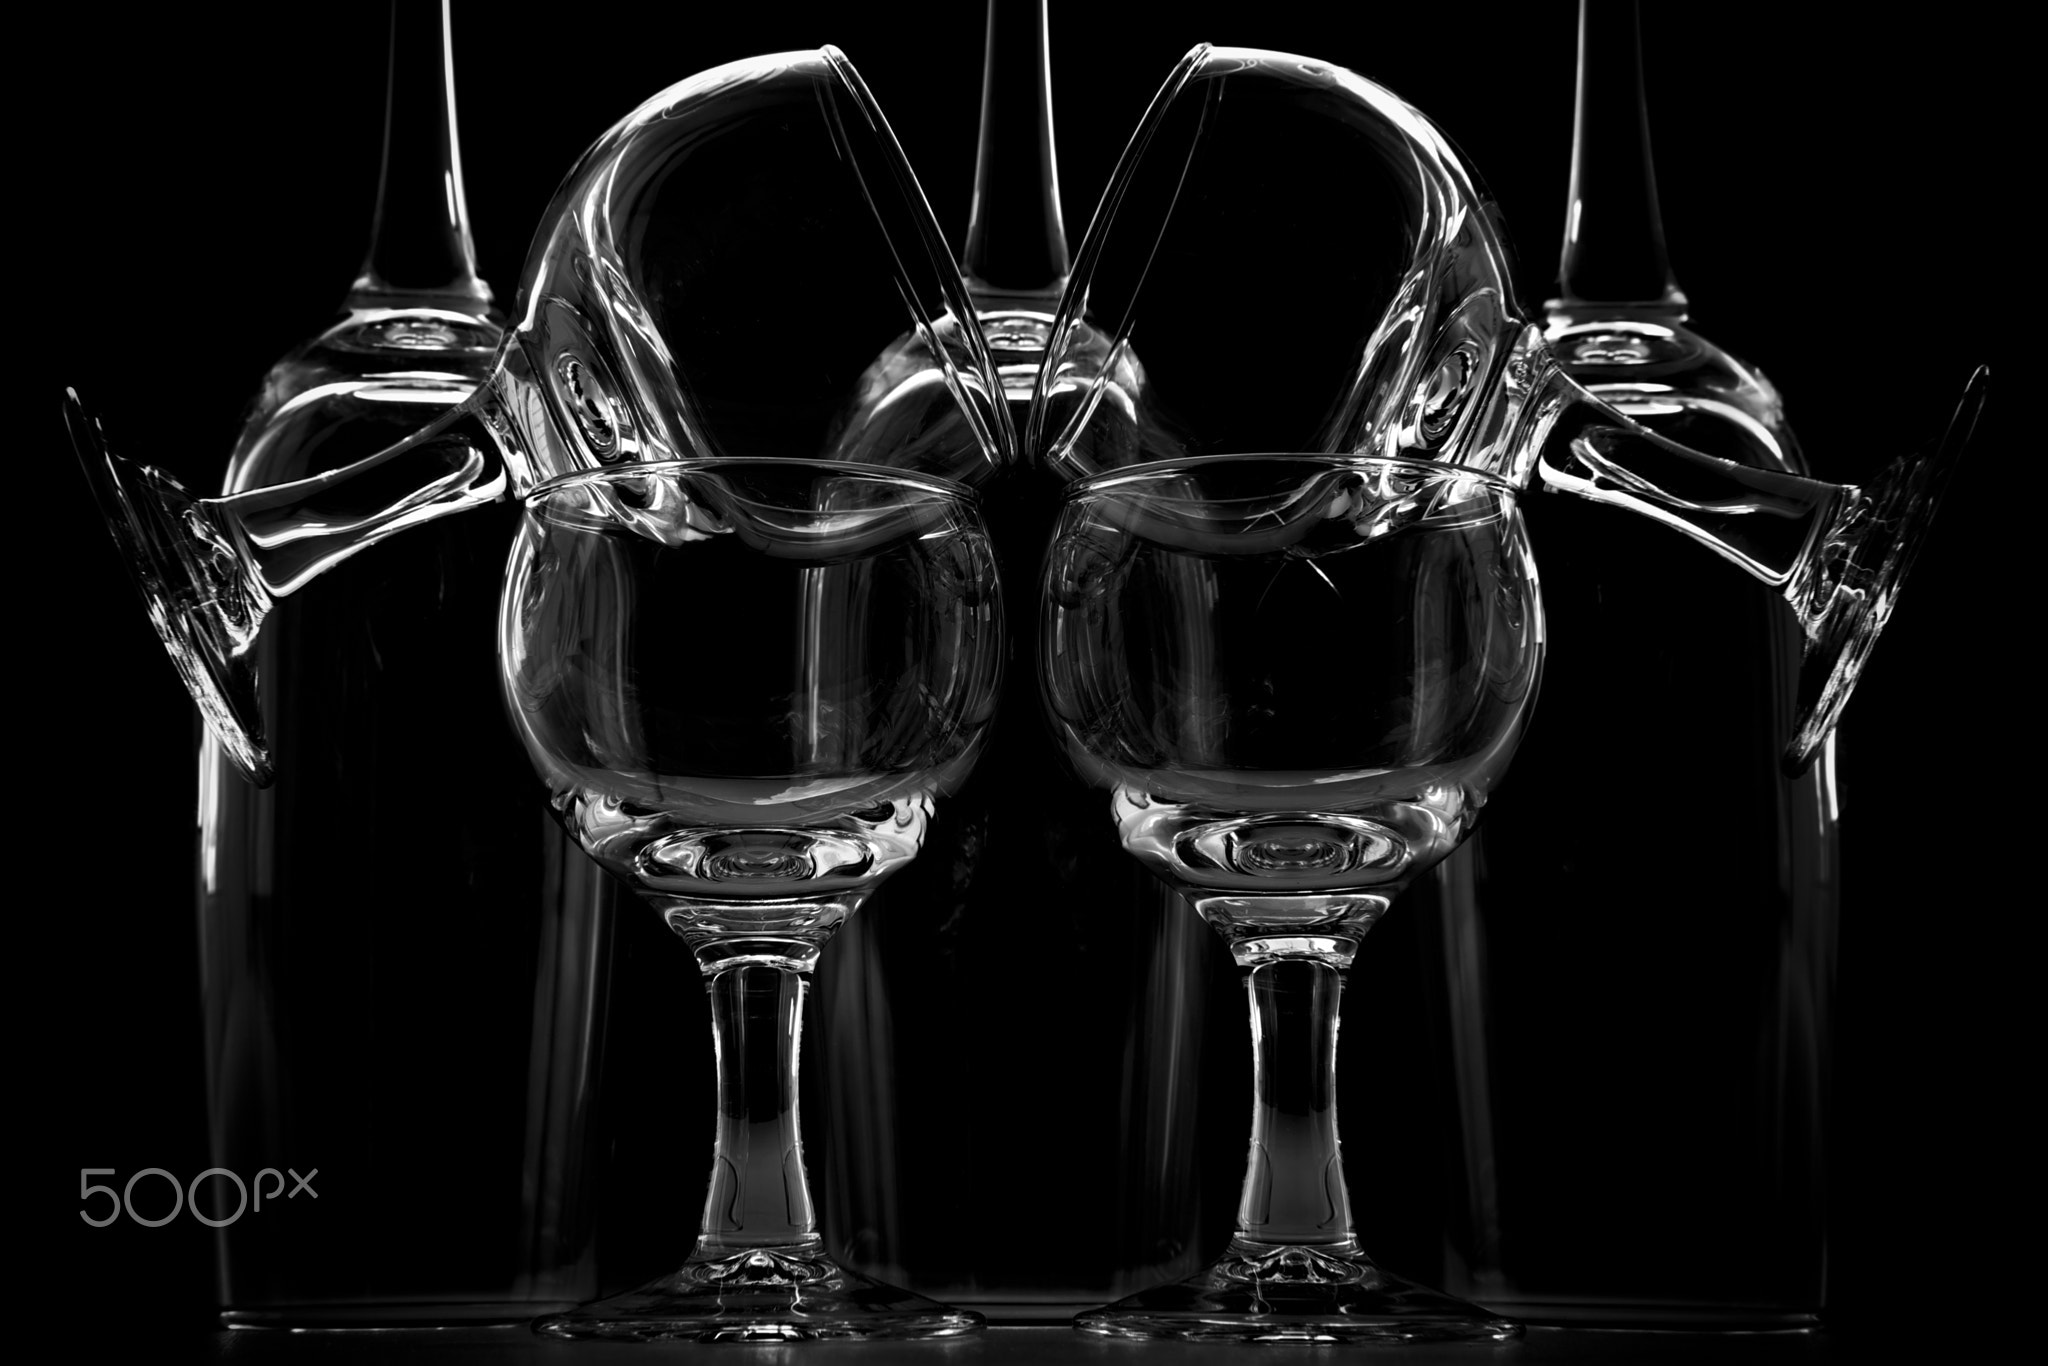 wine glass art for interiors ,fujifilm x-pro2 acros black and white